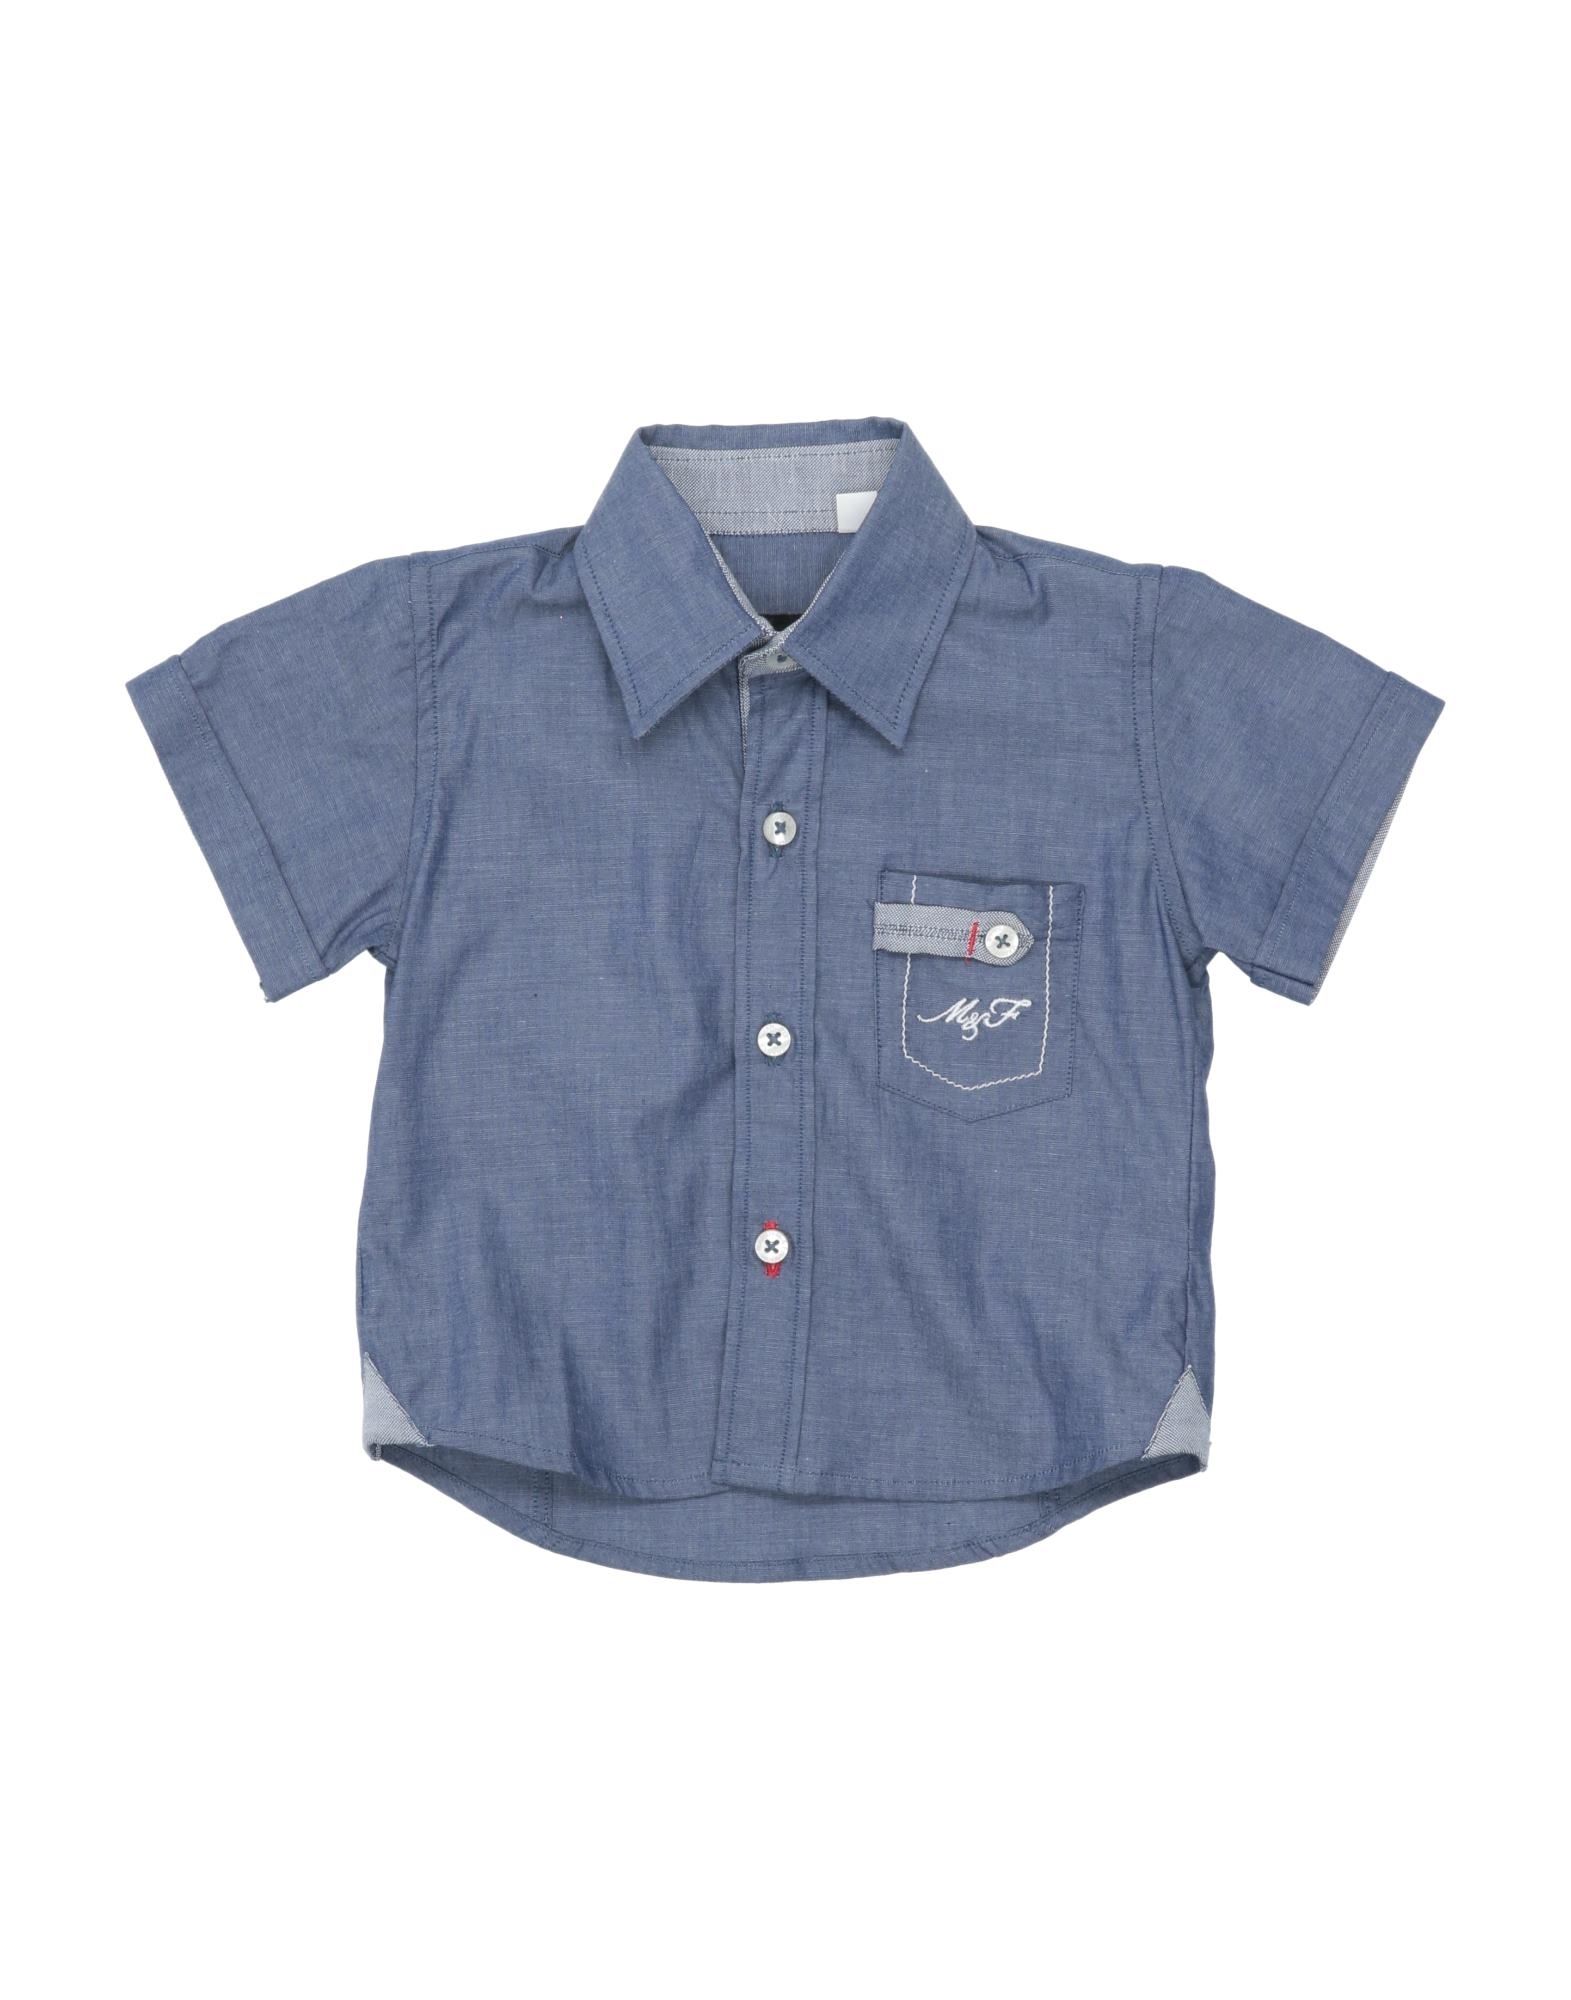 Manuell & Frank Kids' Shirts In Slate Blue